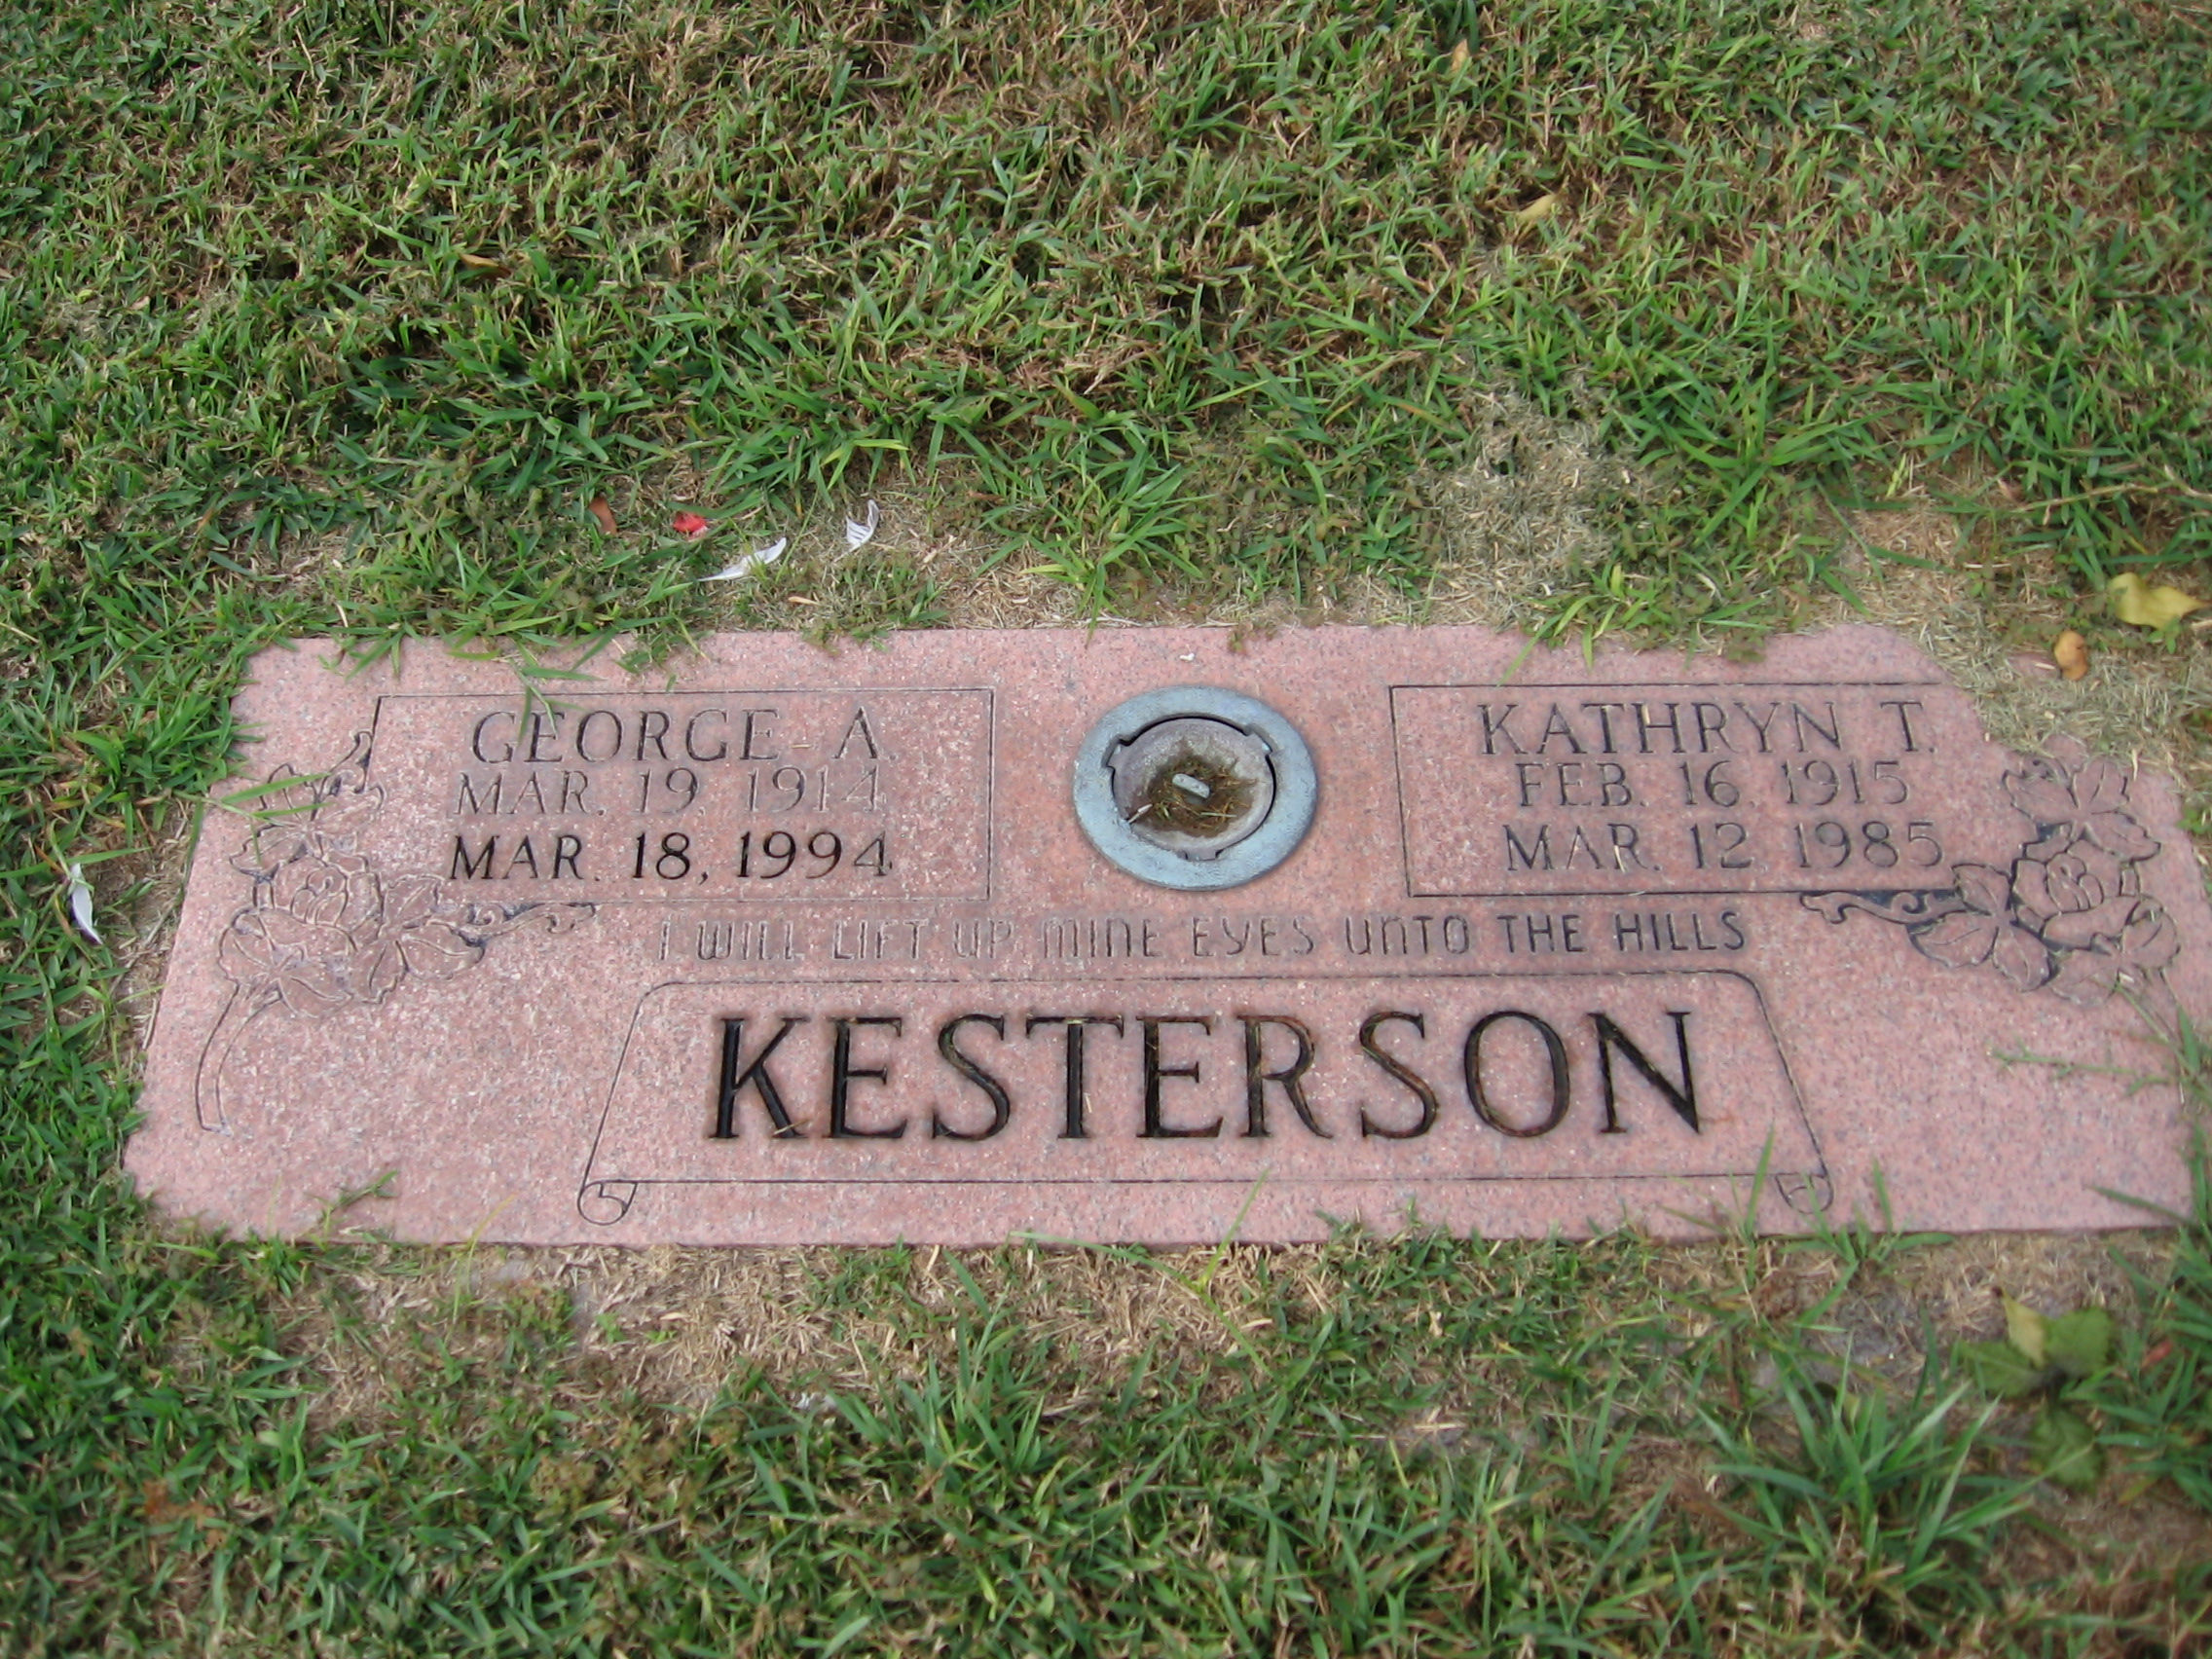 George A Kesterson